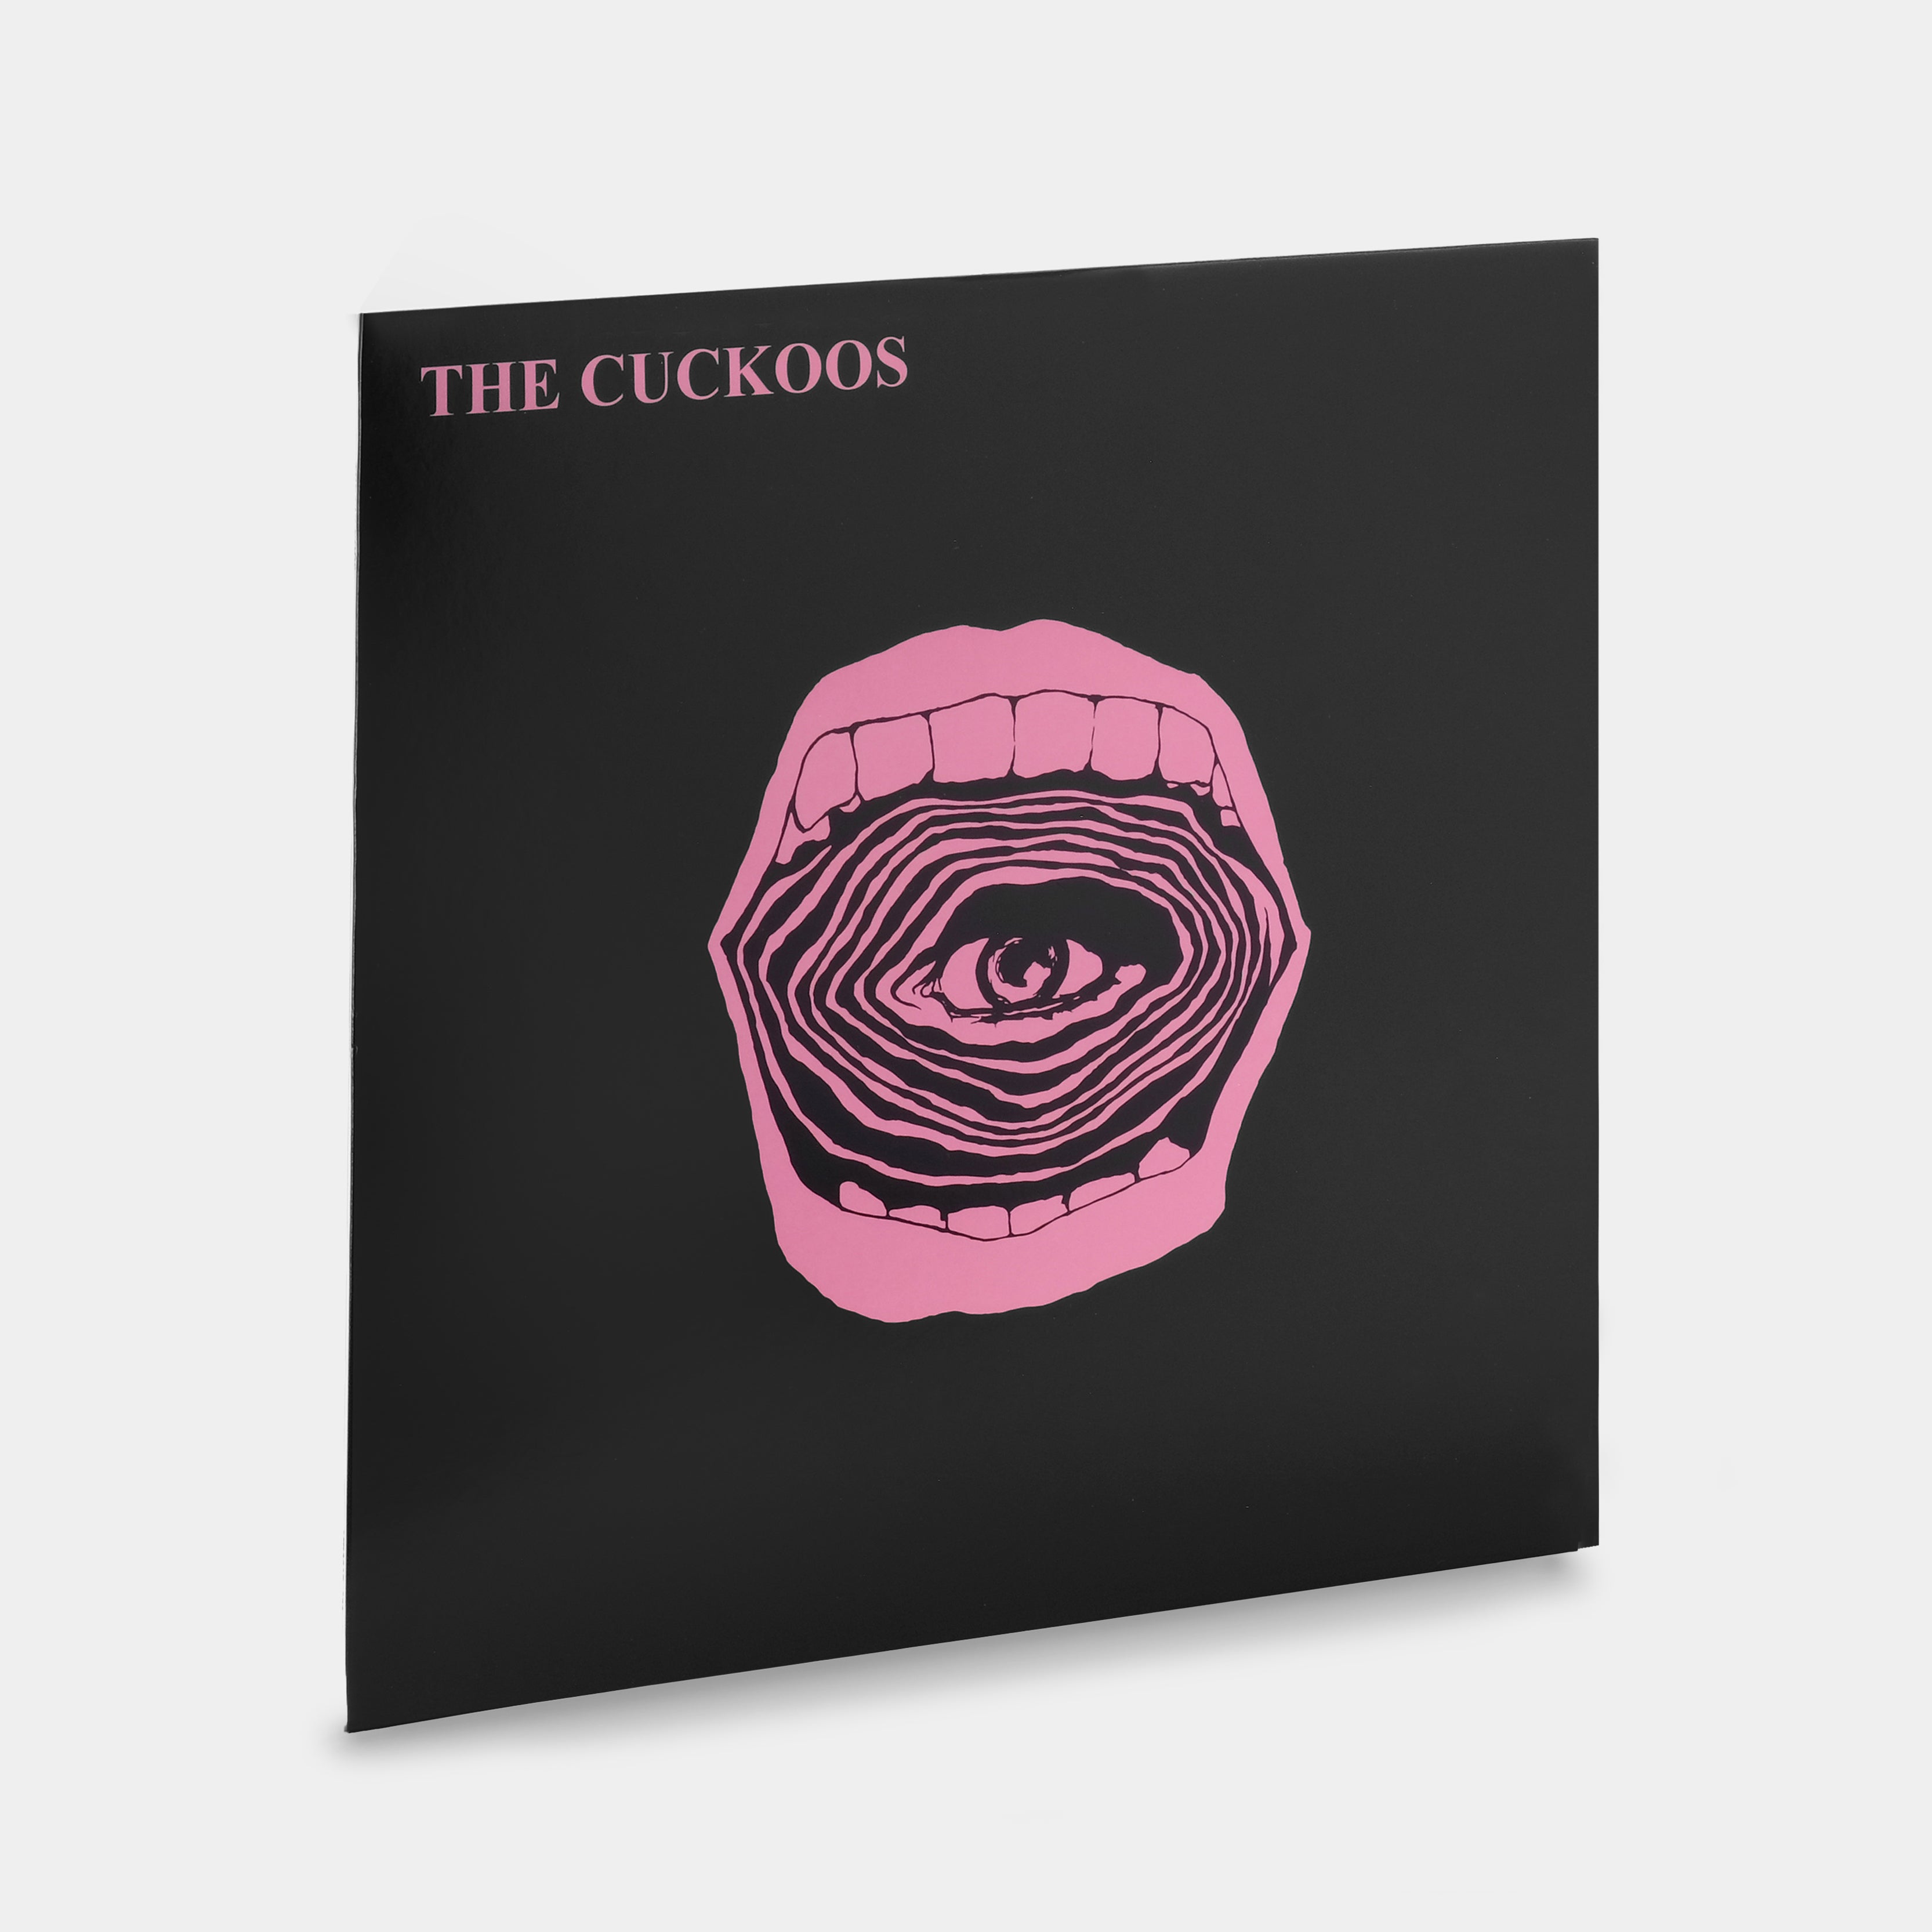 The Cuckoos - The Cuckoos LP Vinyl Record